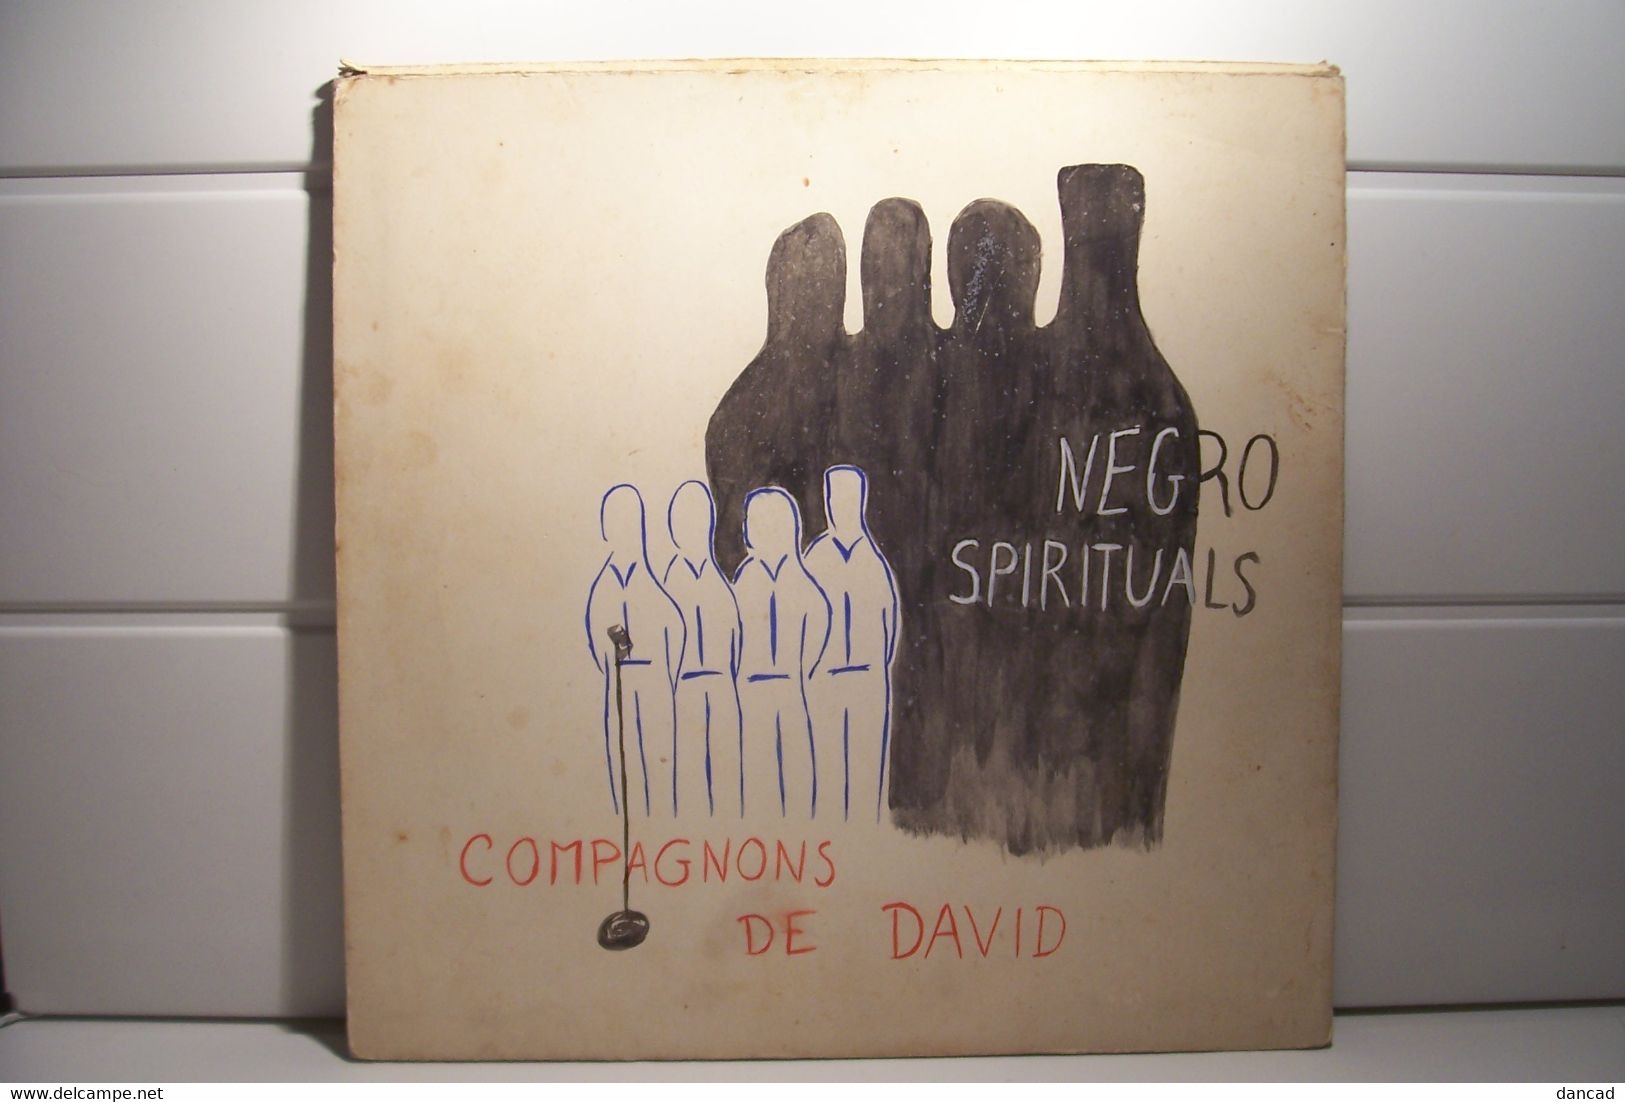 DISQUE  VINYLE - COMPAGNONS DE DAVID - 33 Tours - 25 Cm -( Année 1963) - NEGRO  SPIRITUALS  - - Religion & Gospel